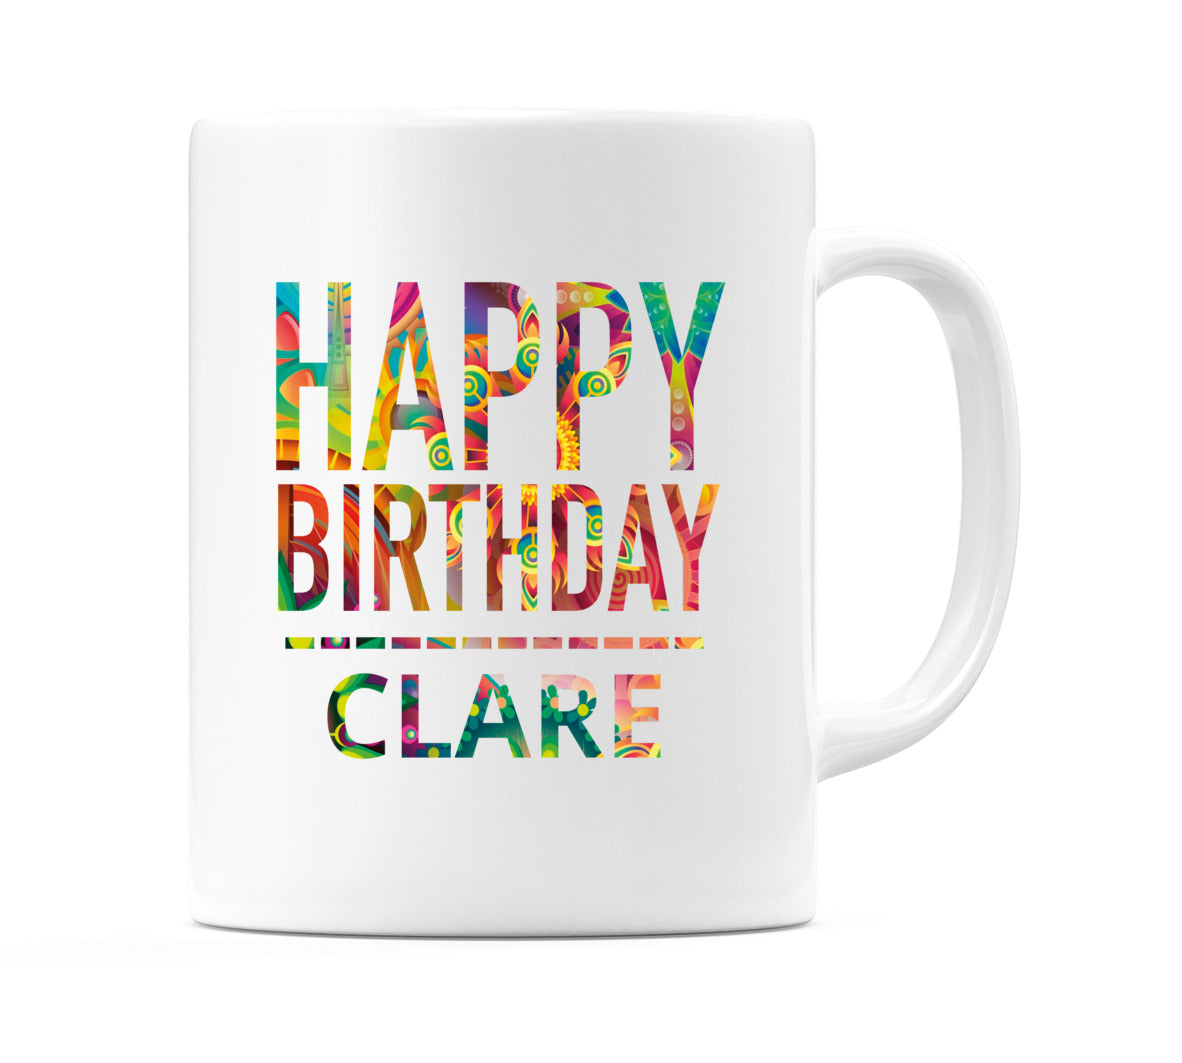 Happy Birthday Clare (Tie Dye Effect) Mug Cup by WeDoMugs